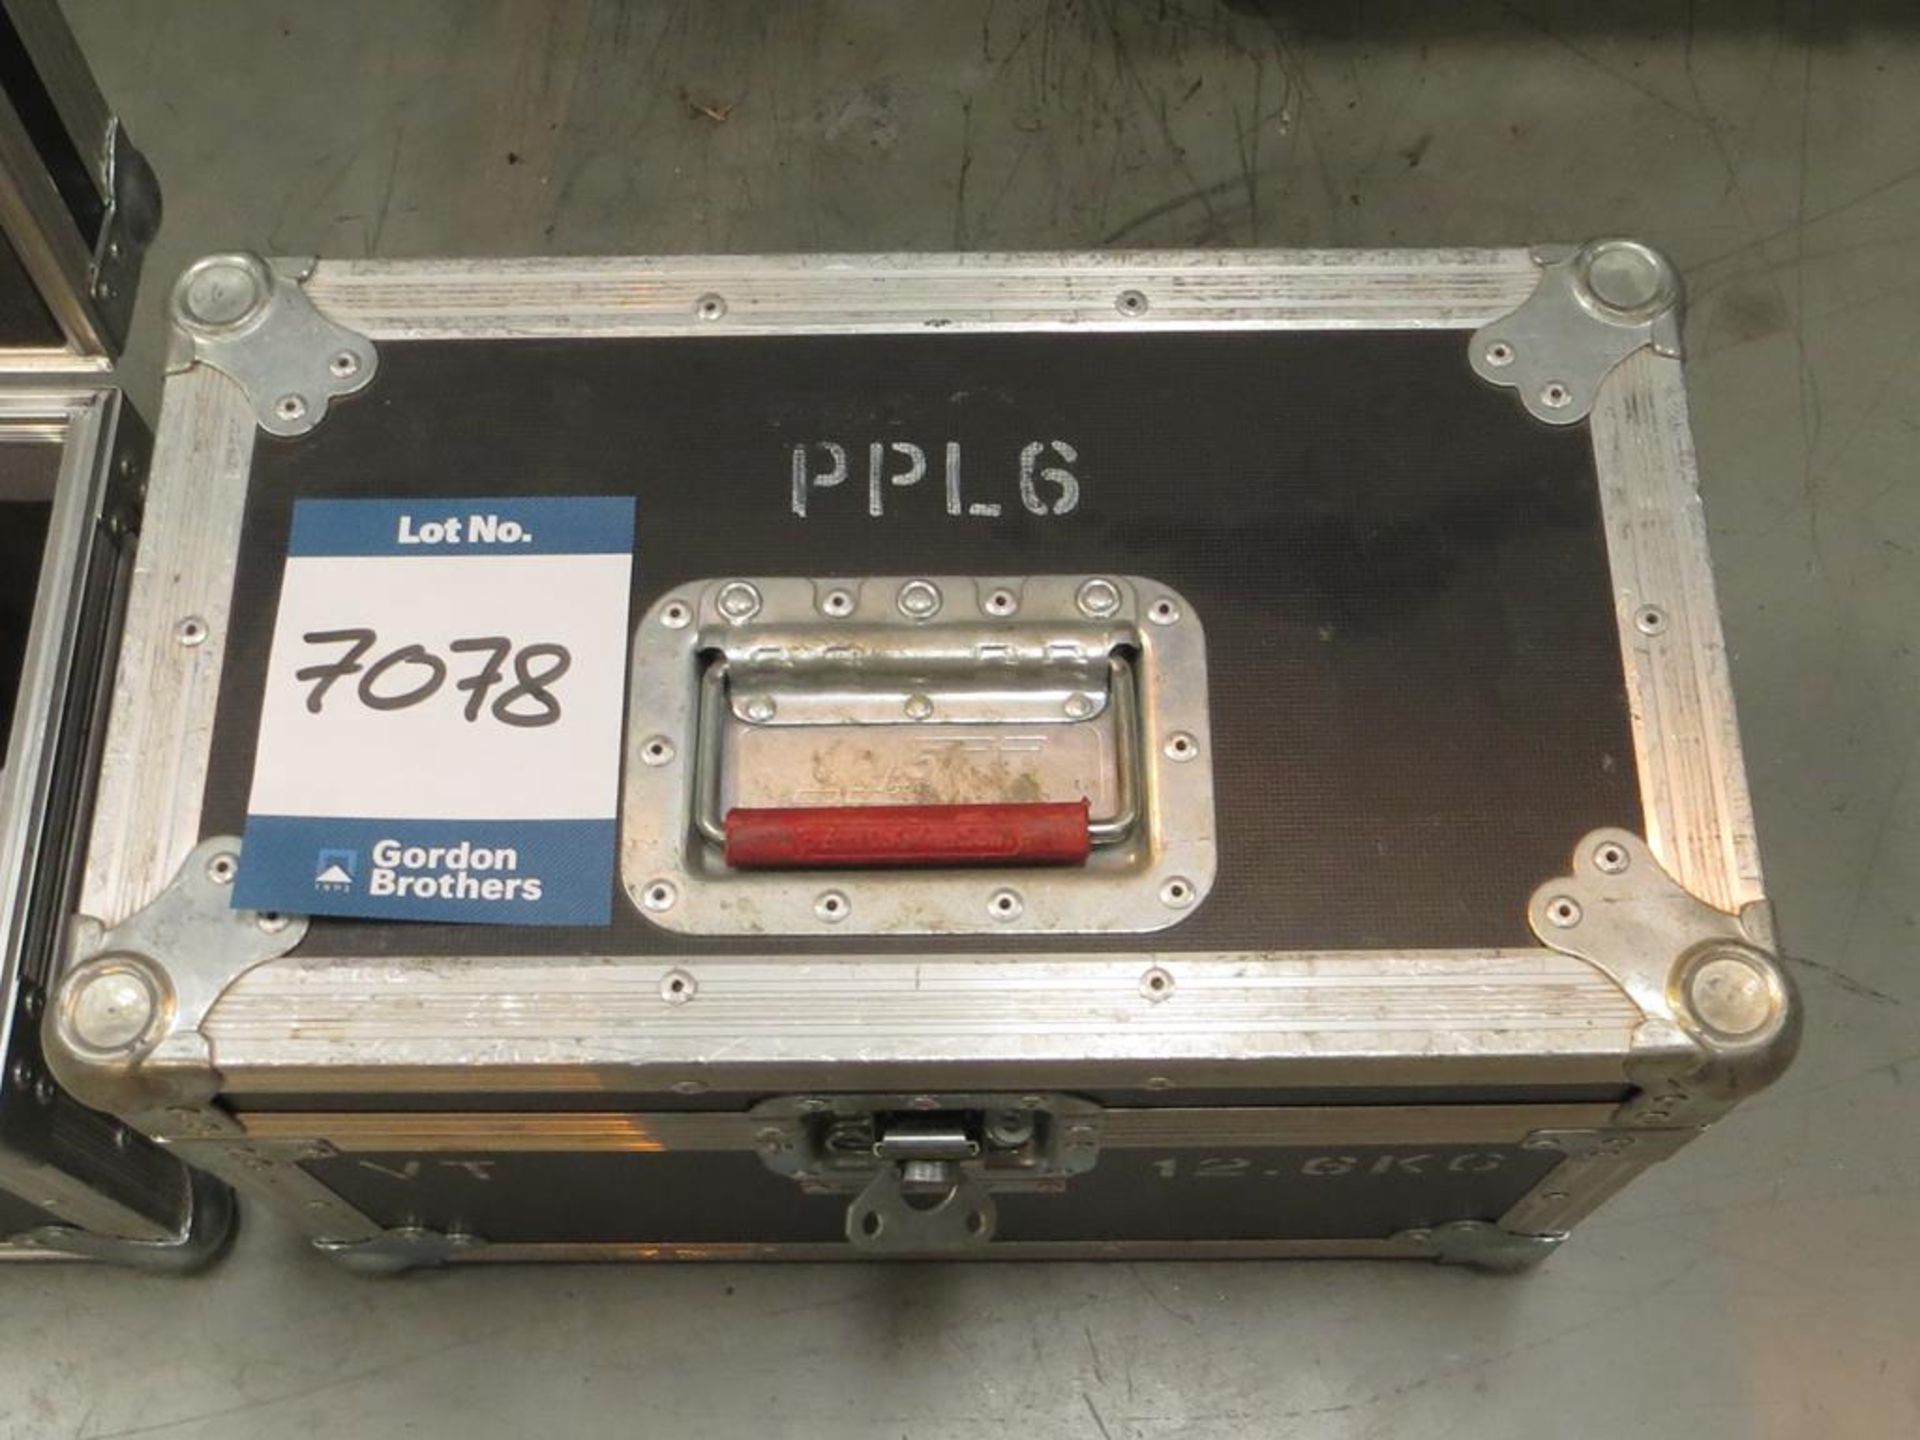 Panasonic, three chip lens, Model D75LEI 1.5-2:1 in transit case: Unit C Moorside, 40 Dava Street, - Image 2 of 2